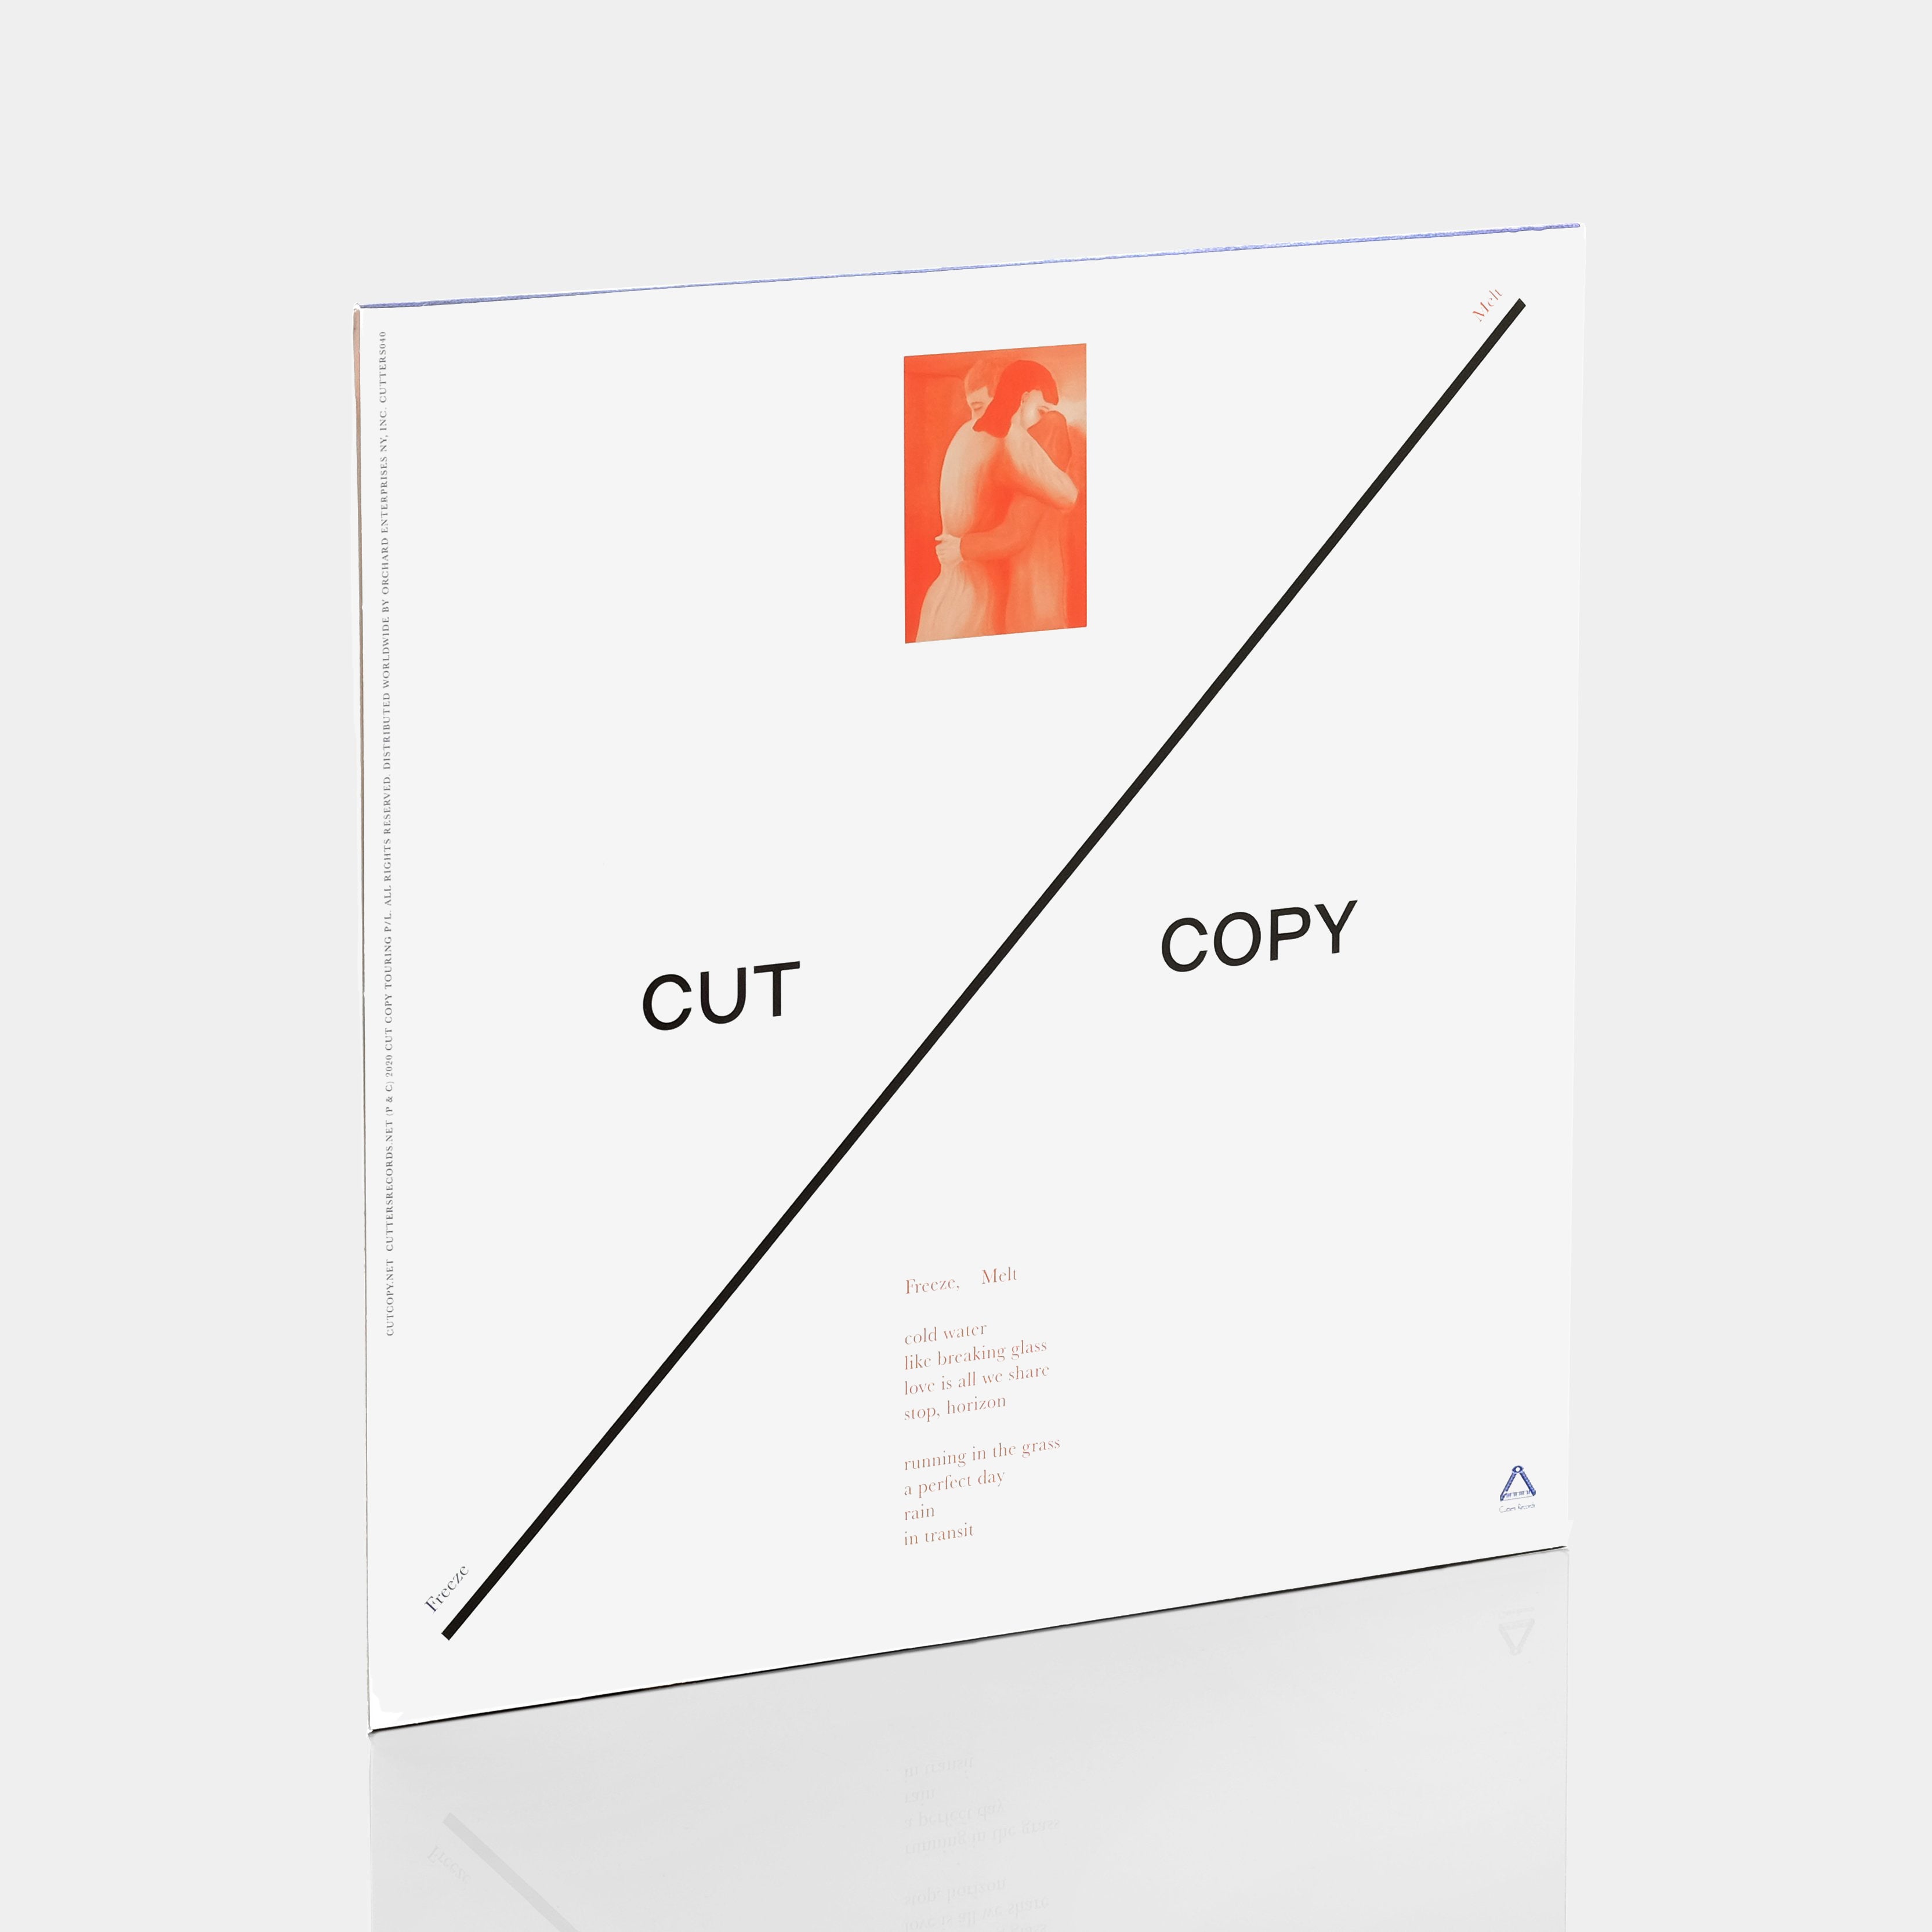 Cut Copy - Freeze, Melt LP Blue Vinyl Record